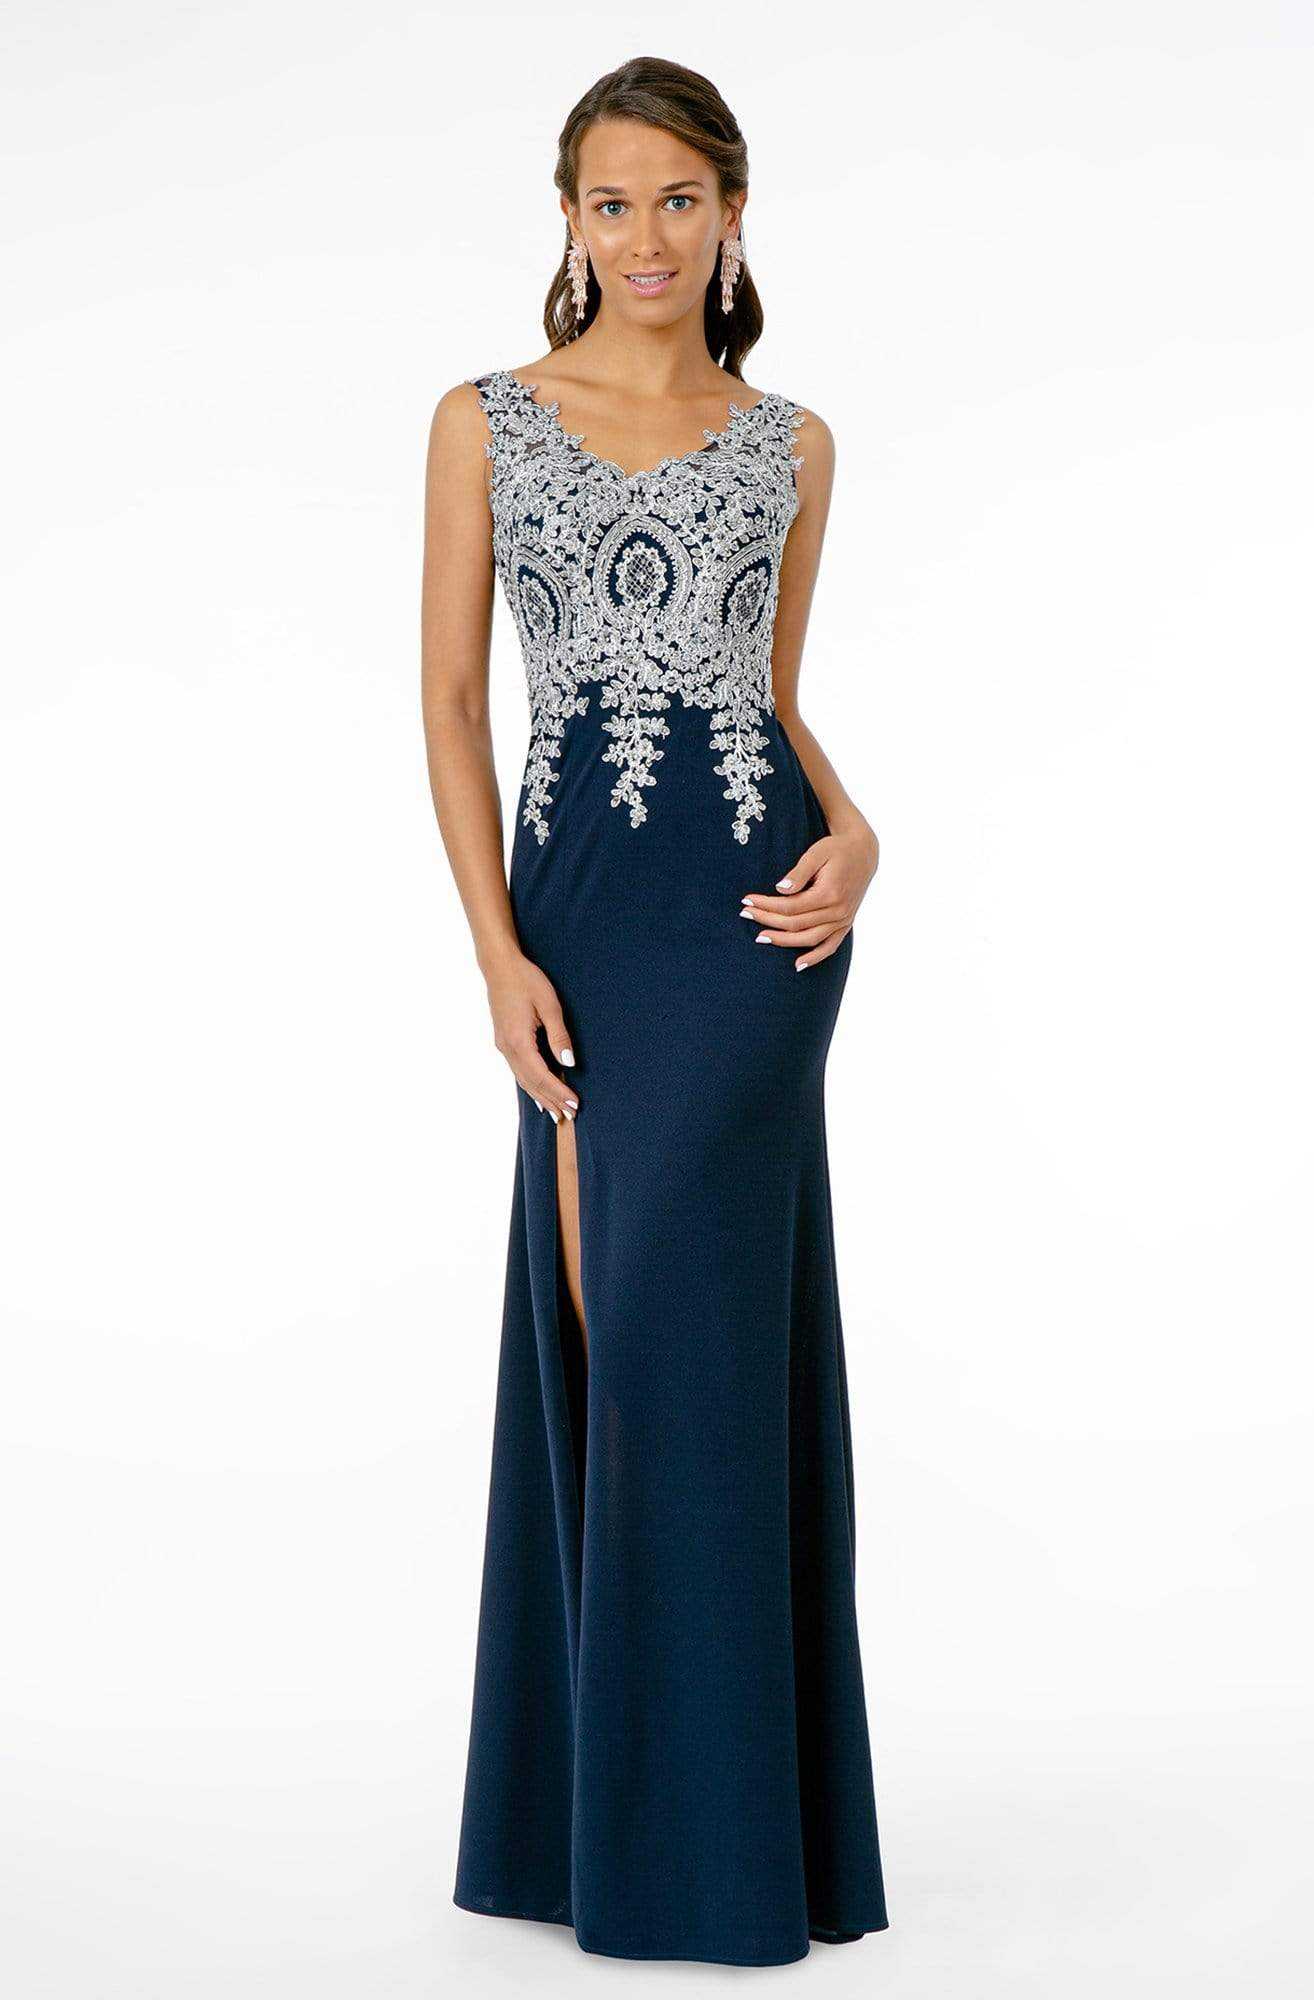 Elizabeth K, Elizabeth K - Metallic Lace Appliqued Bodice Dress GL1839 - 1 pc Navy/Silver In Size L Available